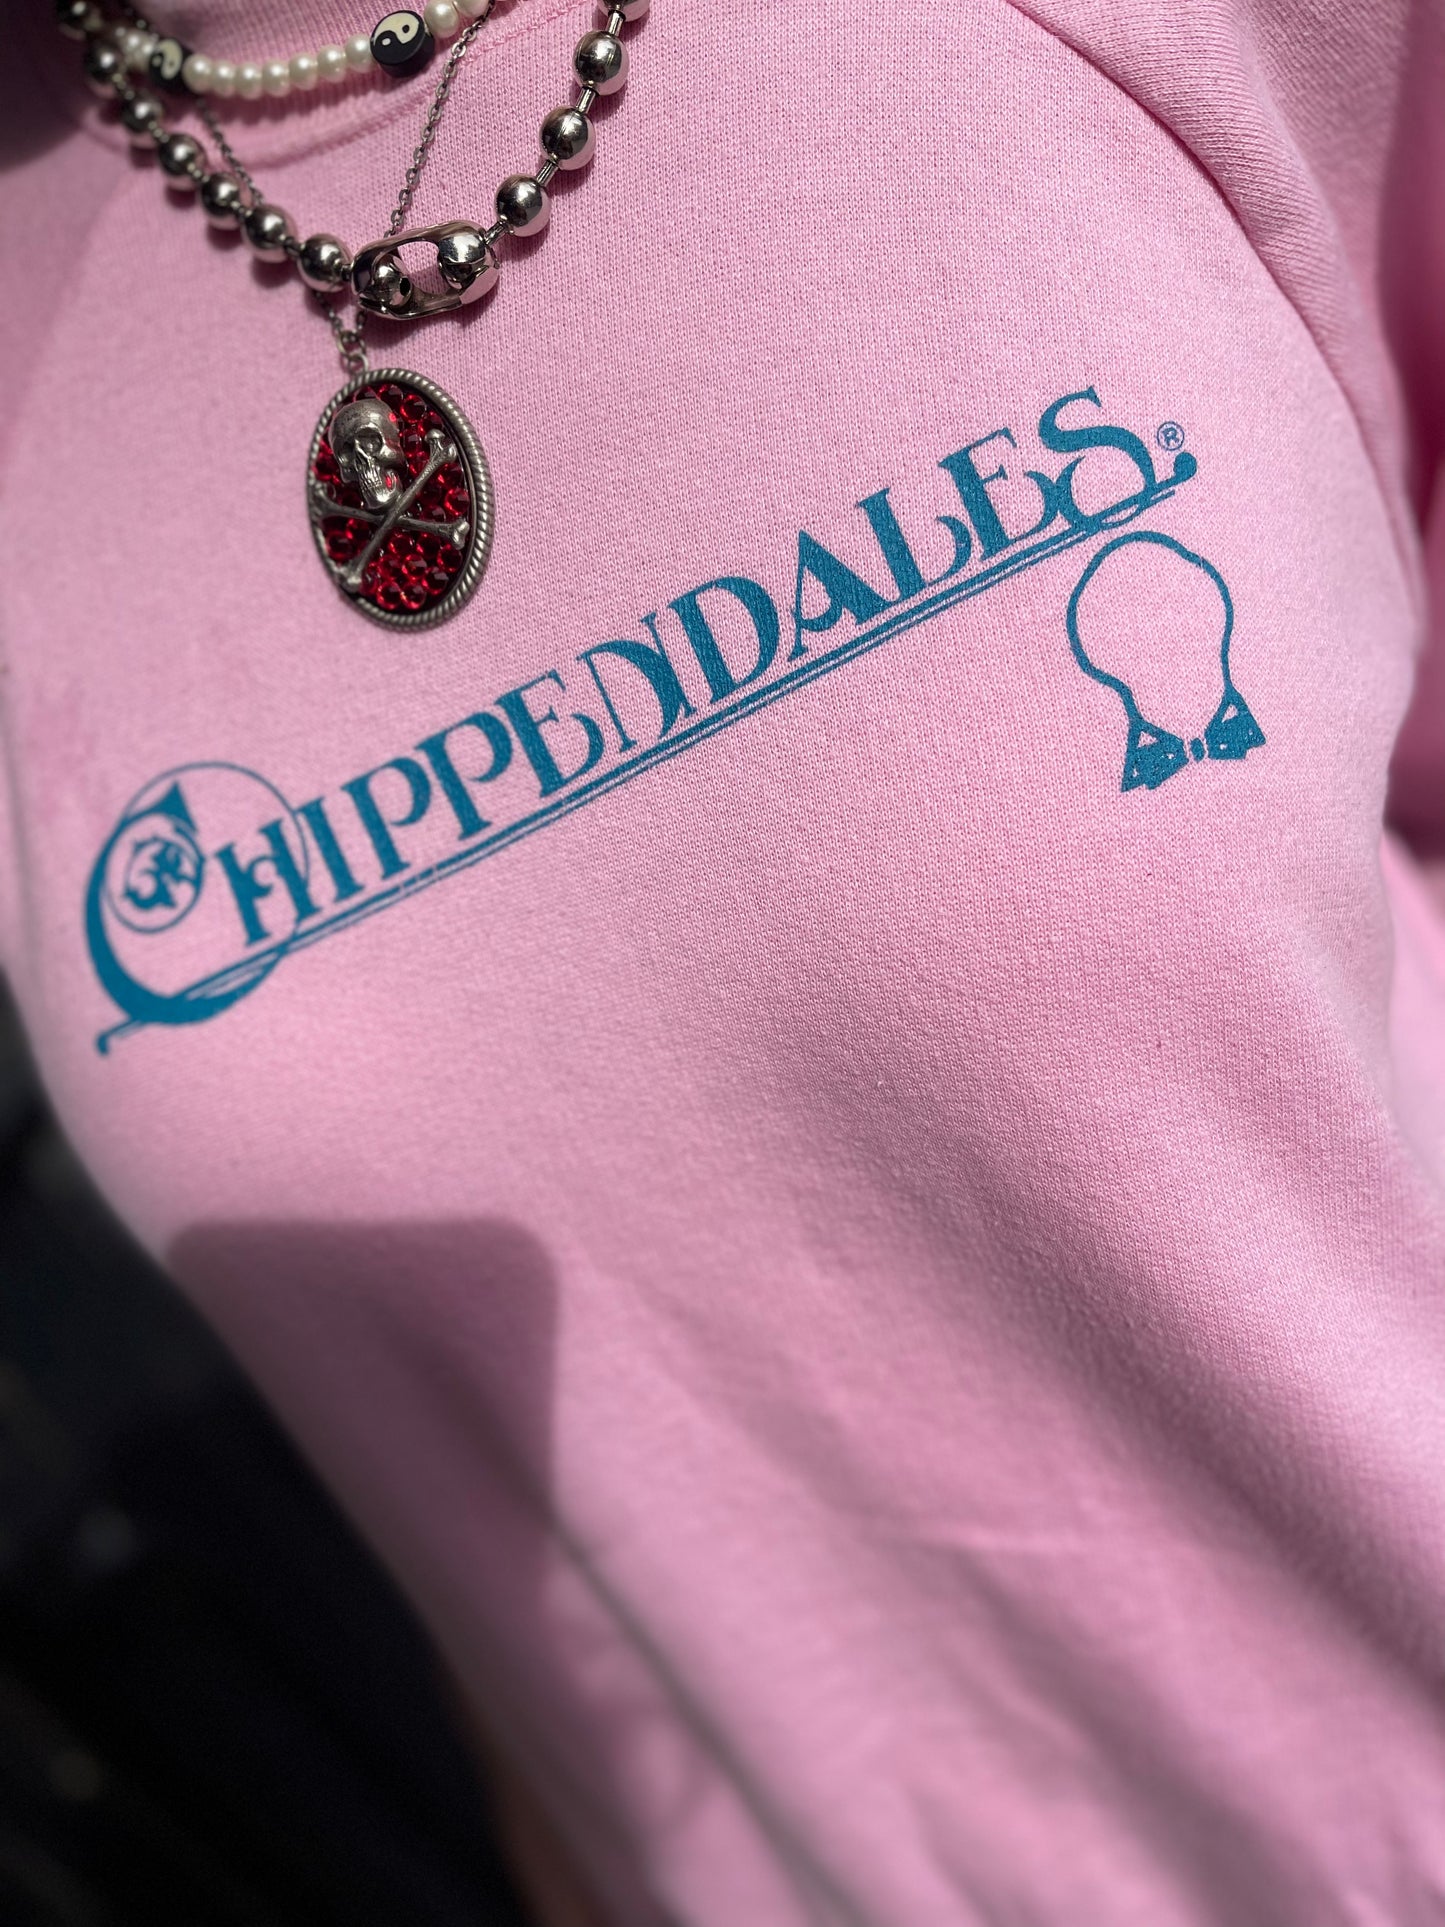 Vintage 80s Chippendales Sweatshirt - Spark Pretty